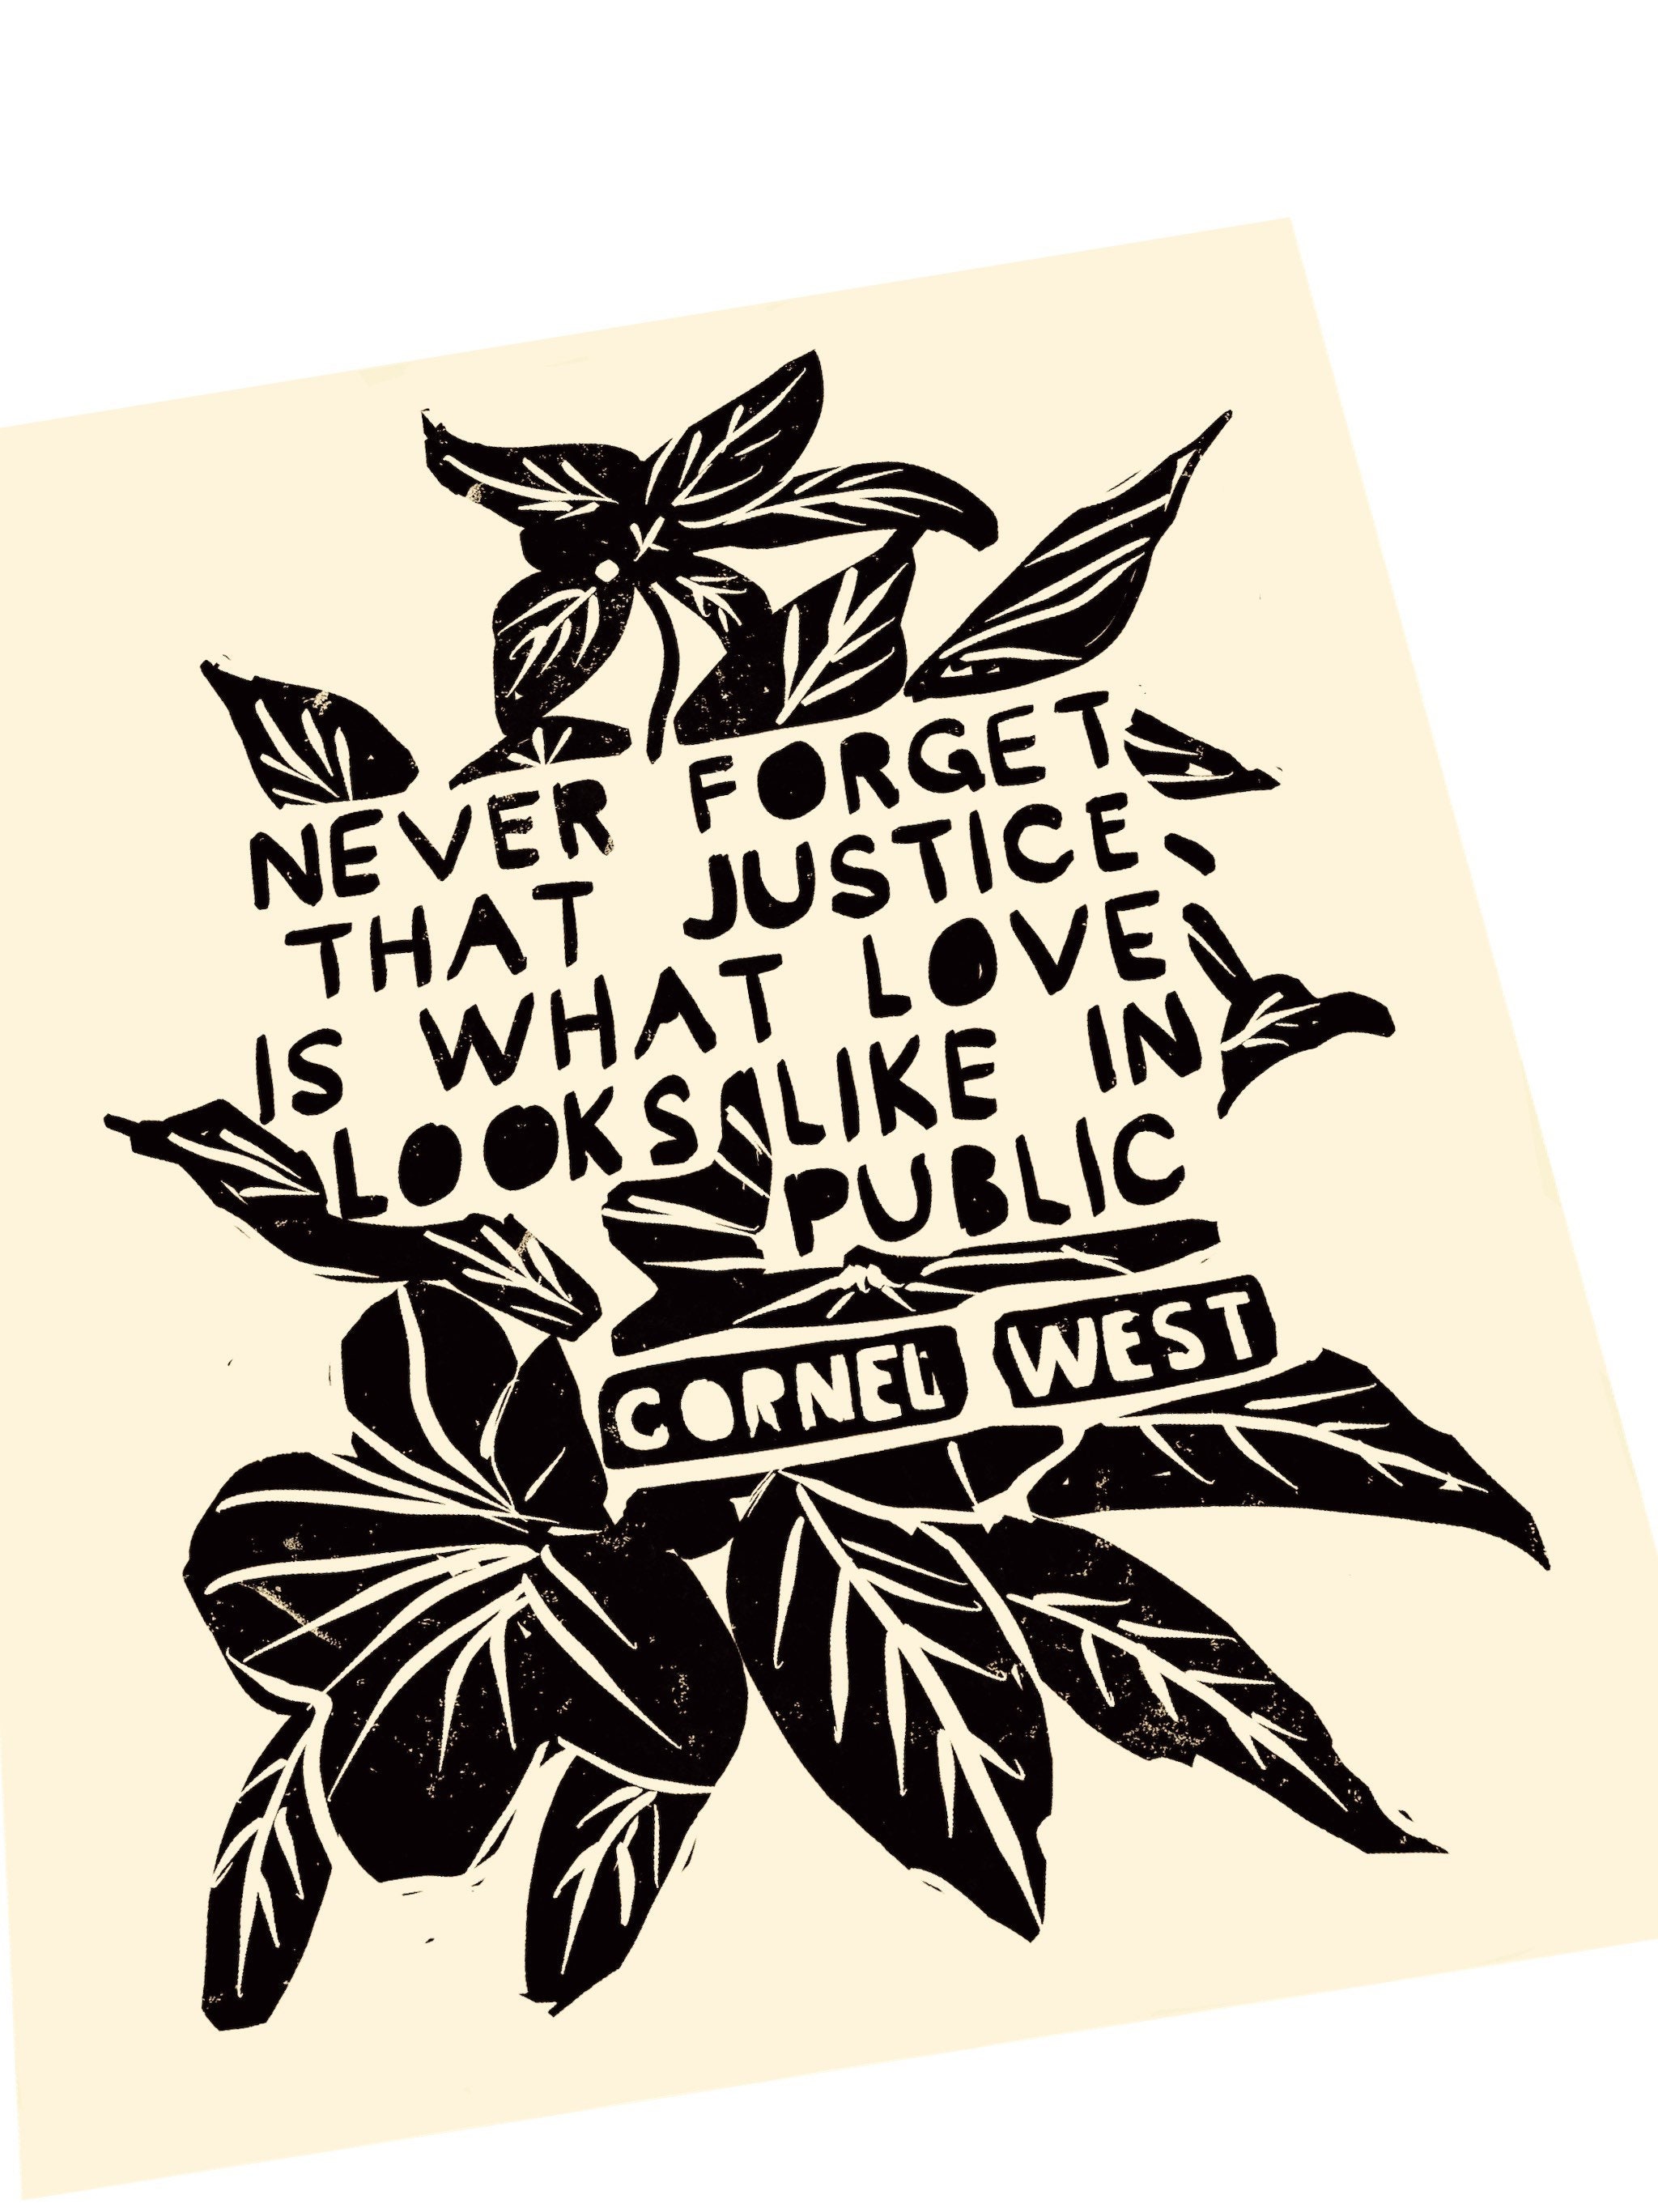 Cornel West Saying No Truer Words Ever Spoken photo